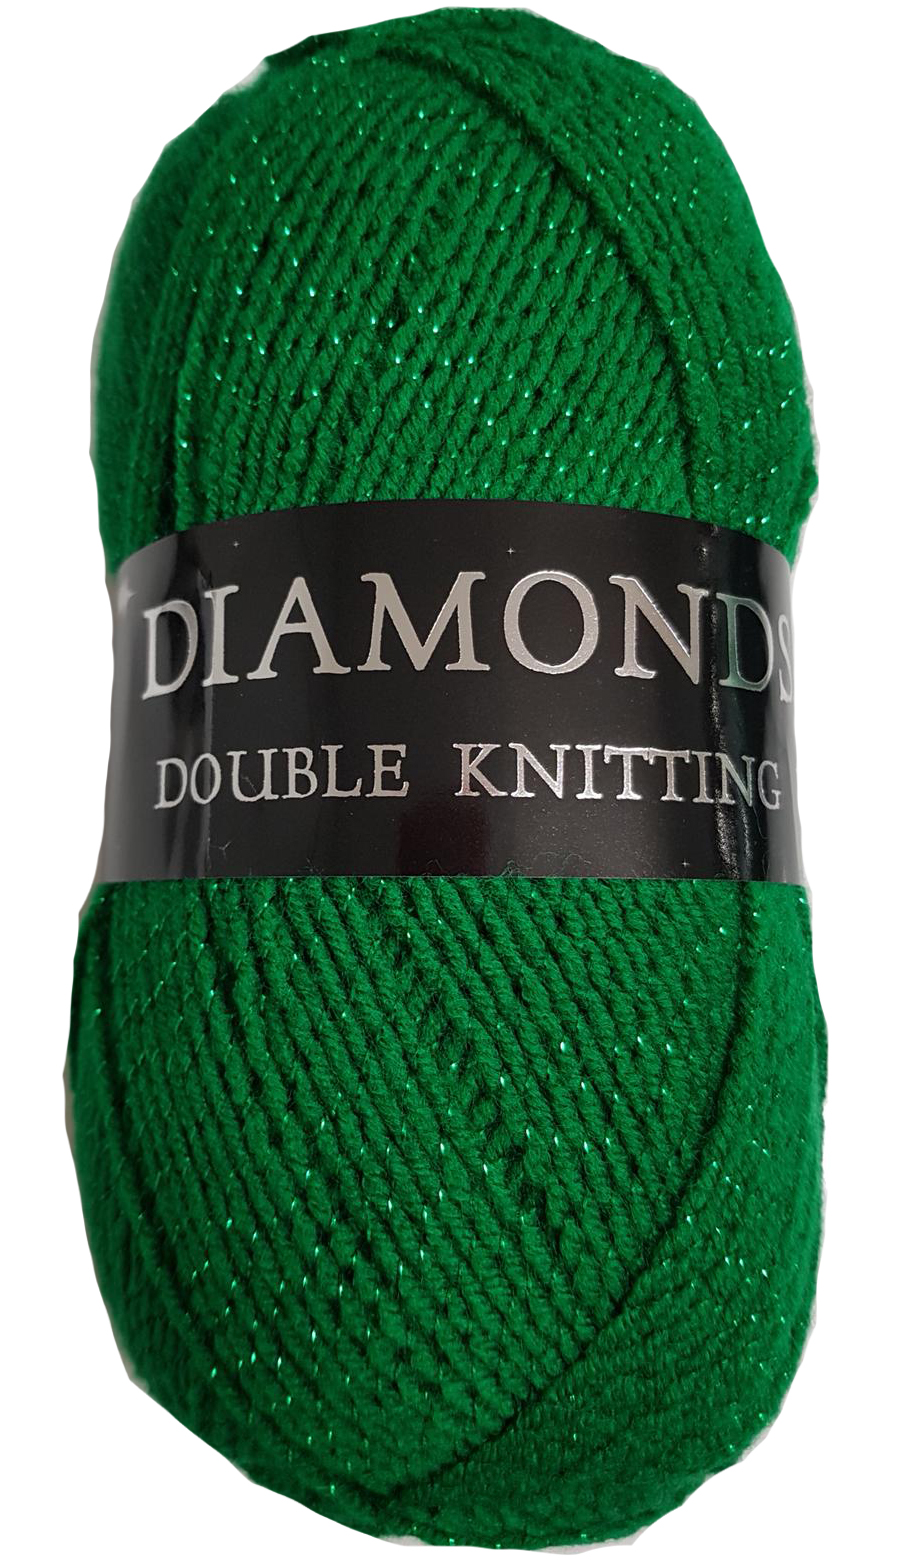 Diamonds DK Yarn x10 Balls Emerald 413